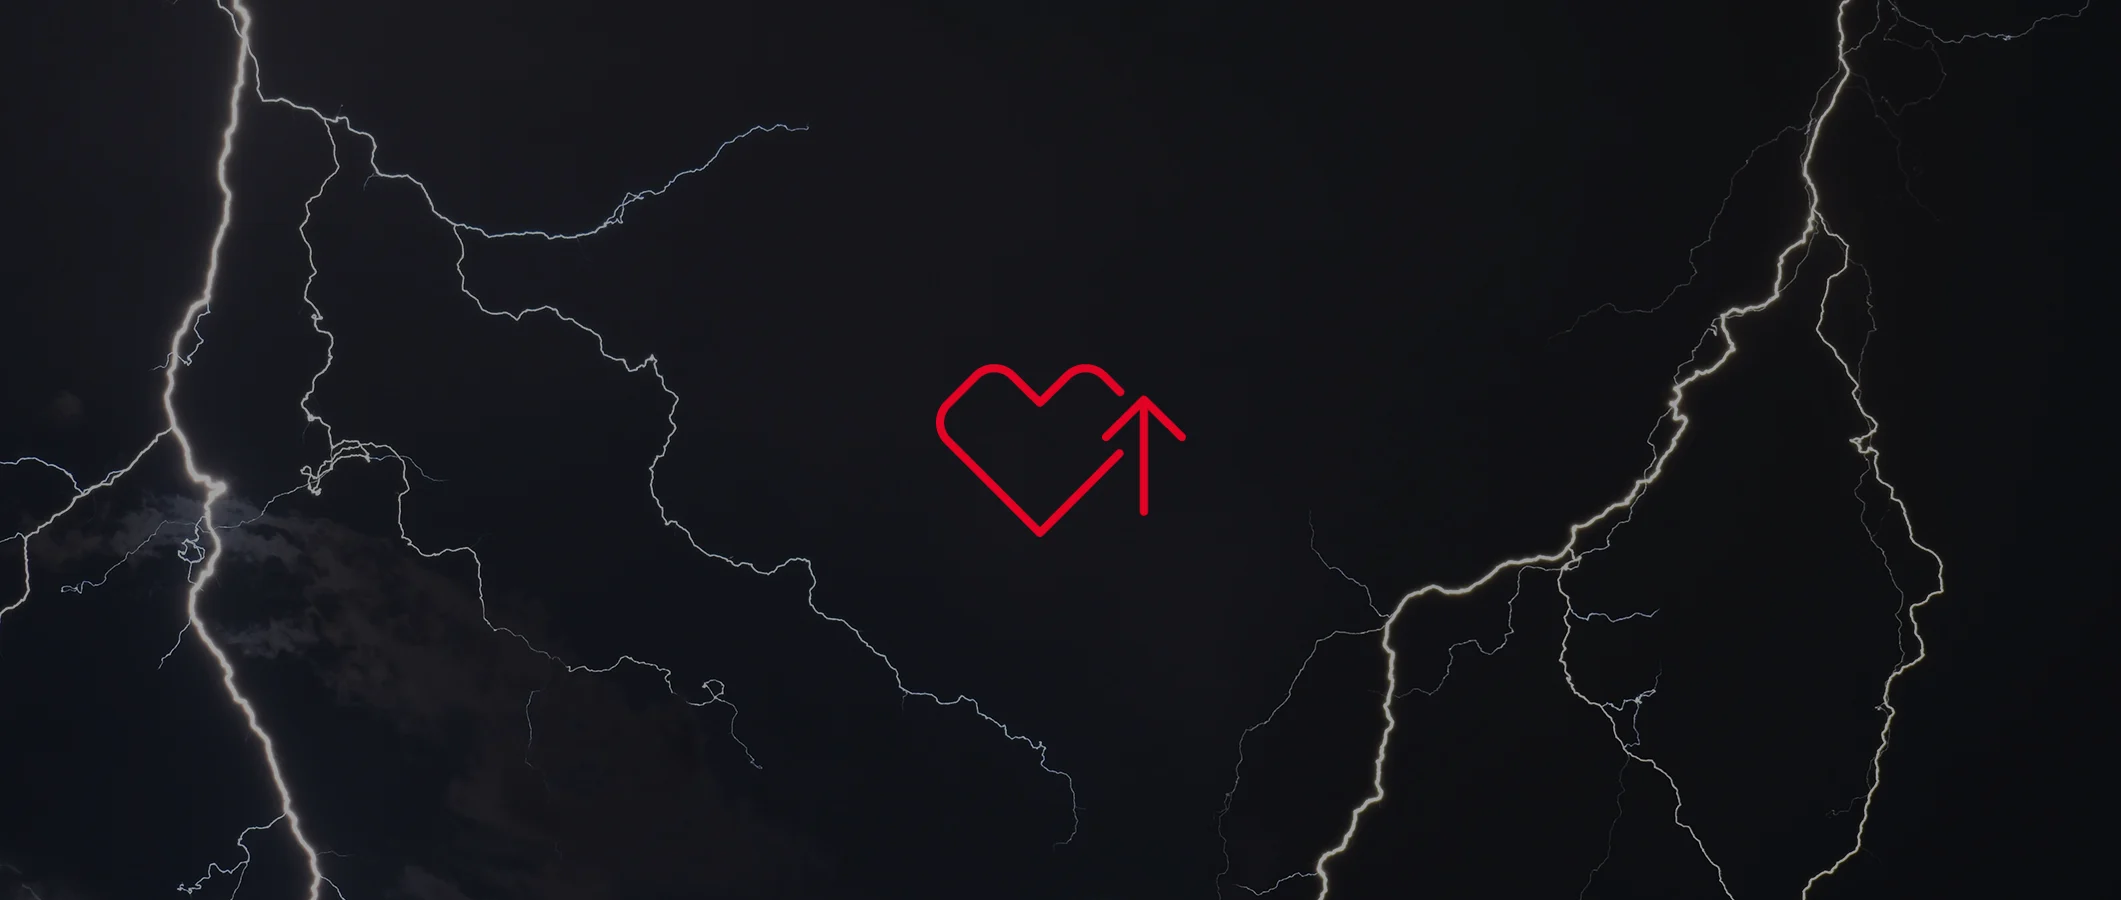 Heart Rate When Struck by Lightning